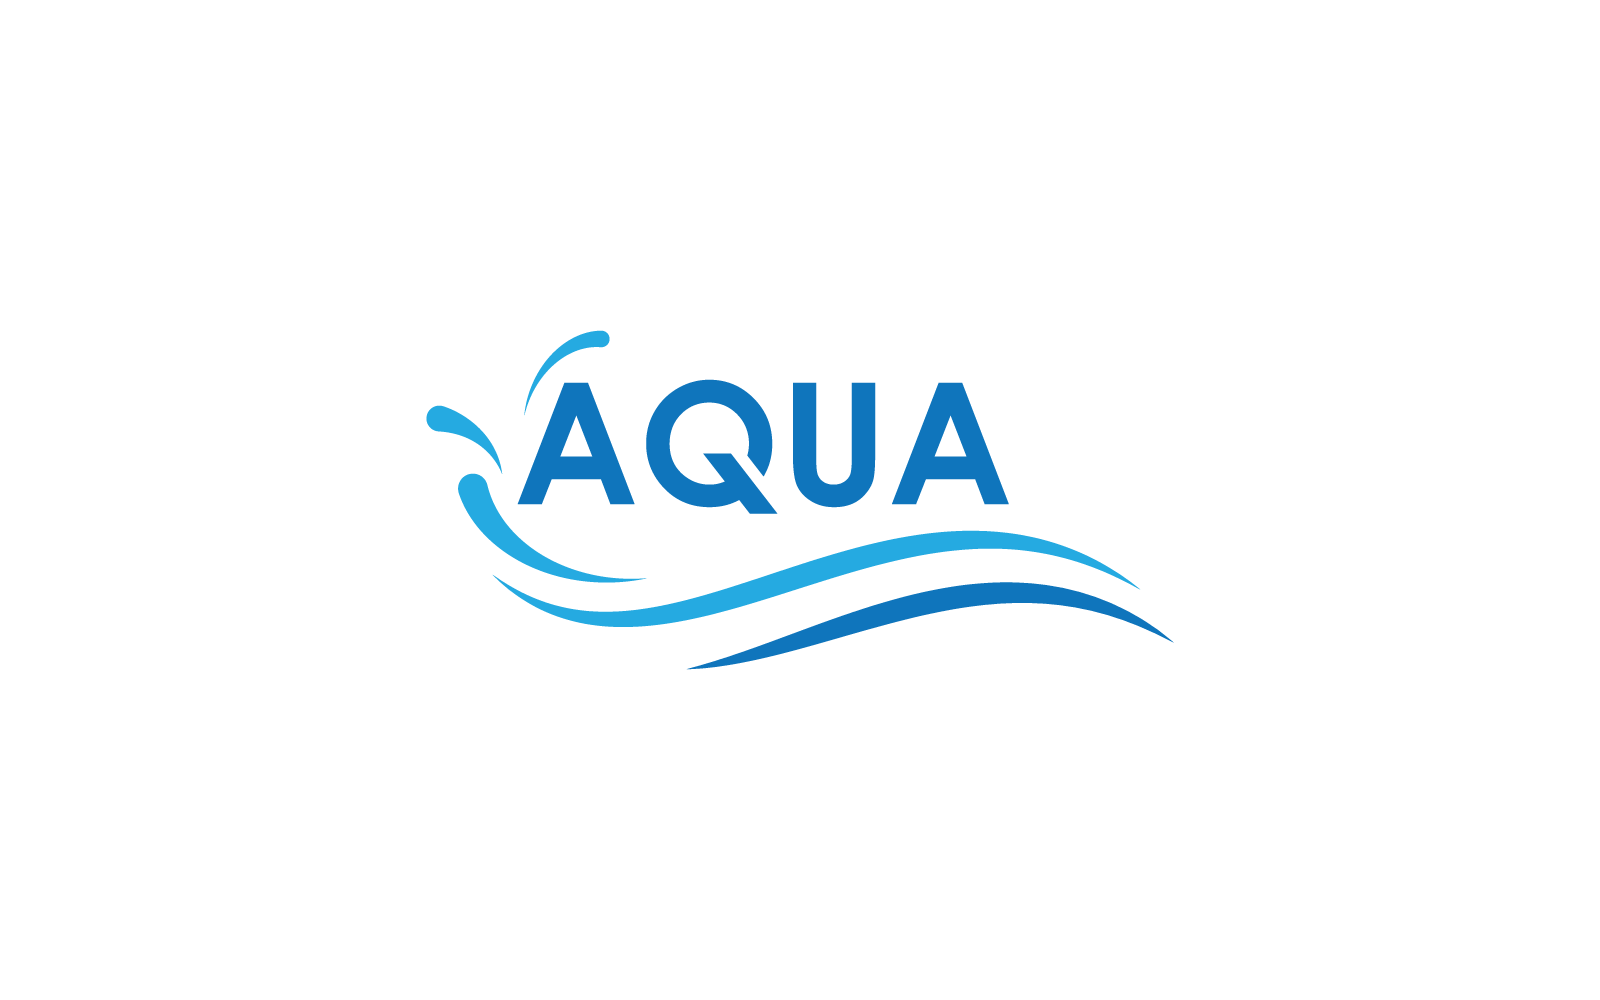 Su Dalgası illüstrasyon logo simge şablon vektör